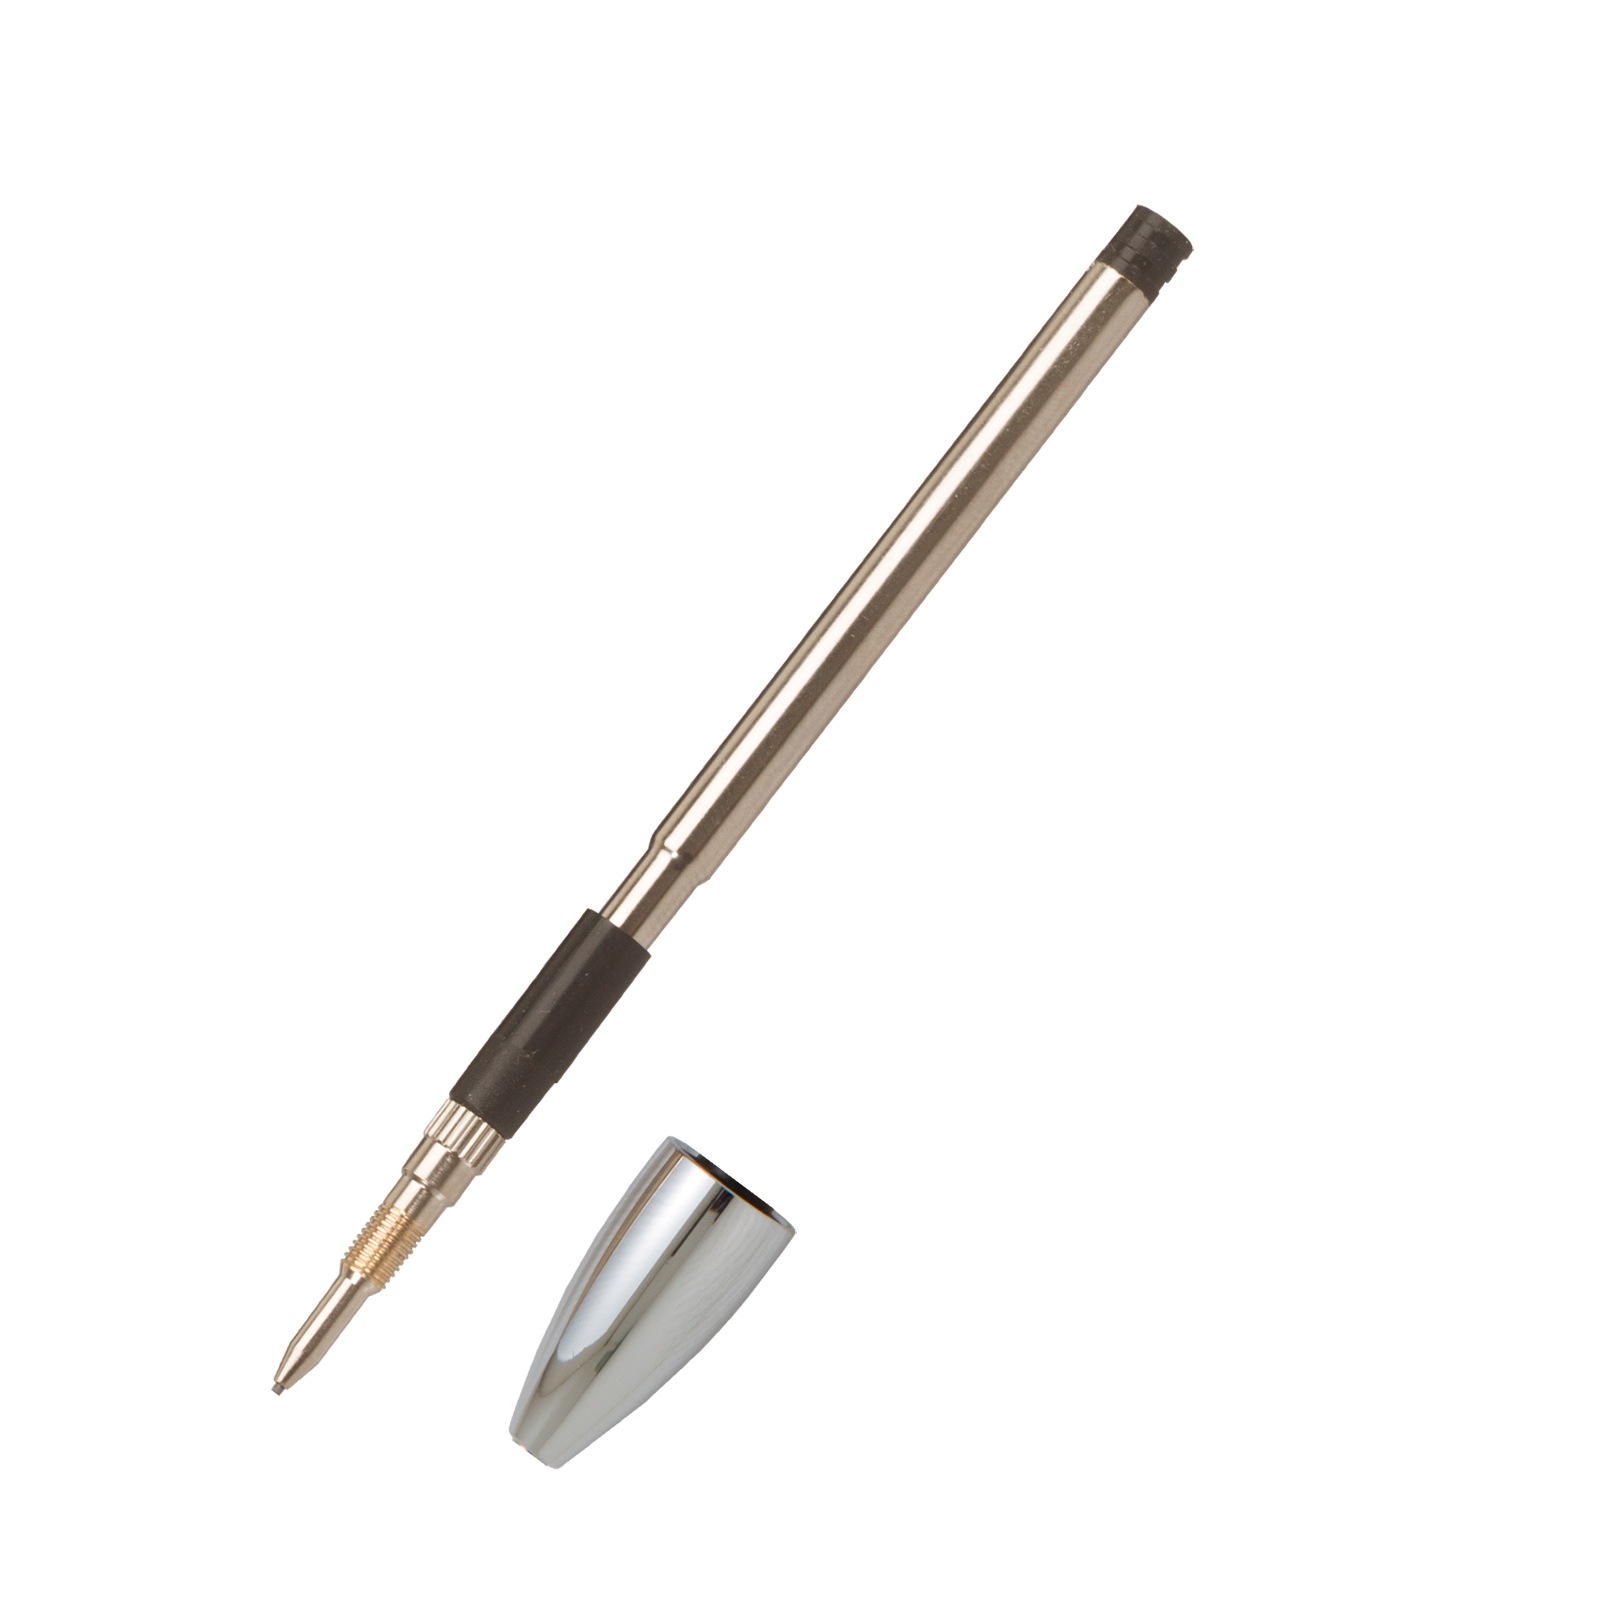 4 Mechanical Pencil Kit Starter Set at Penn State Industries